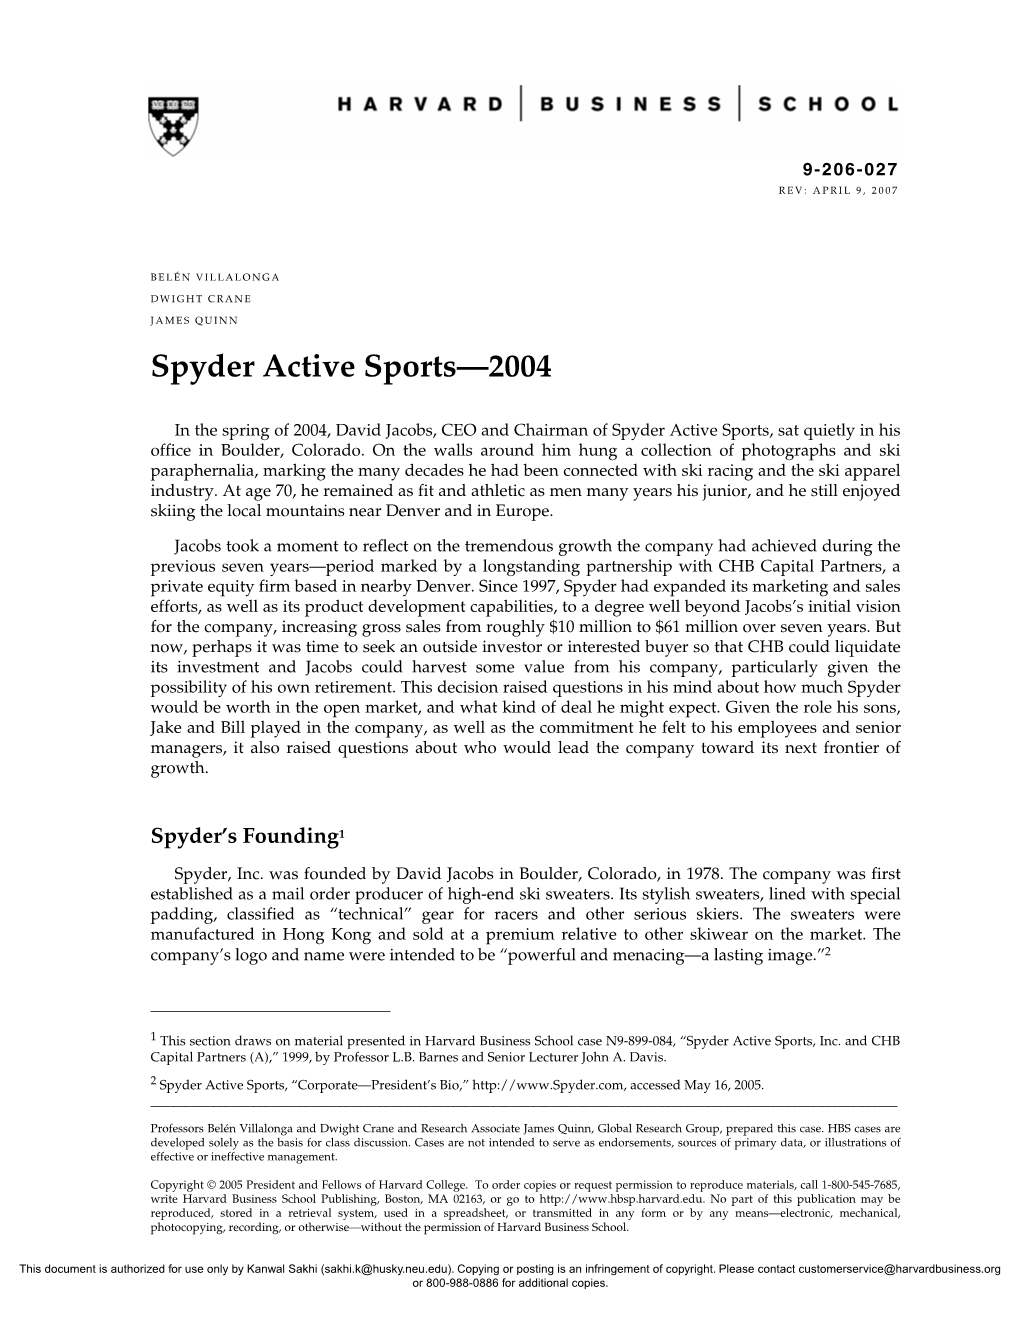 Spyder Active Sports—2004